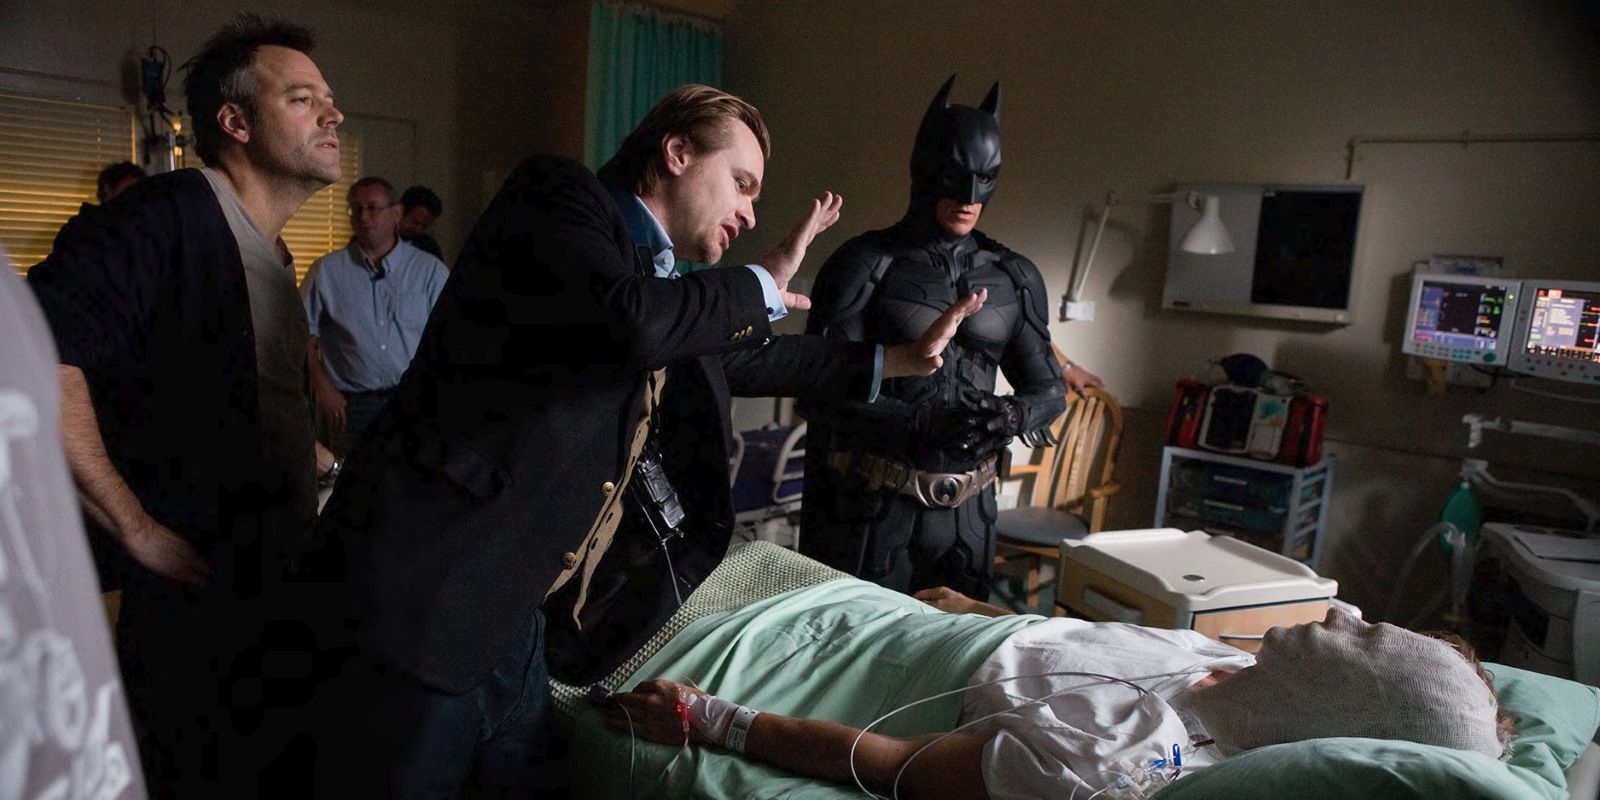 Chris Nolan directing Christian Bale in The Dark Knight